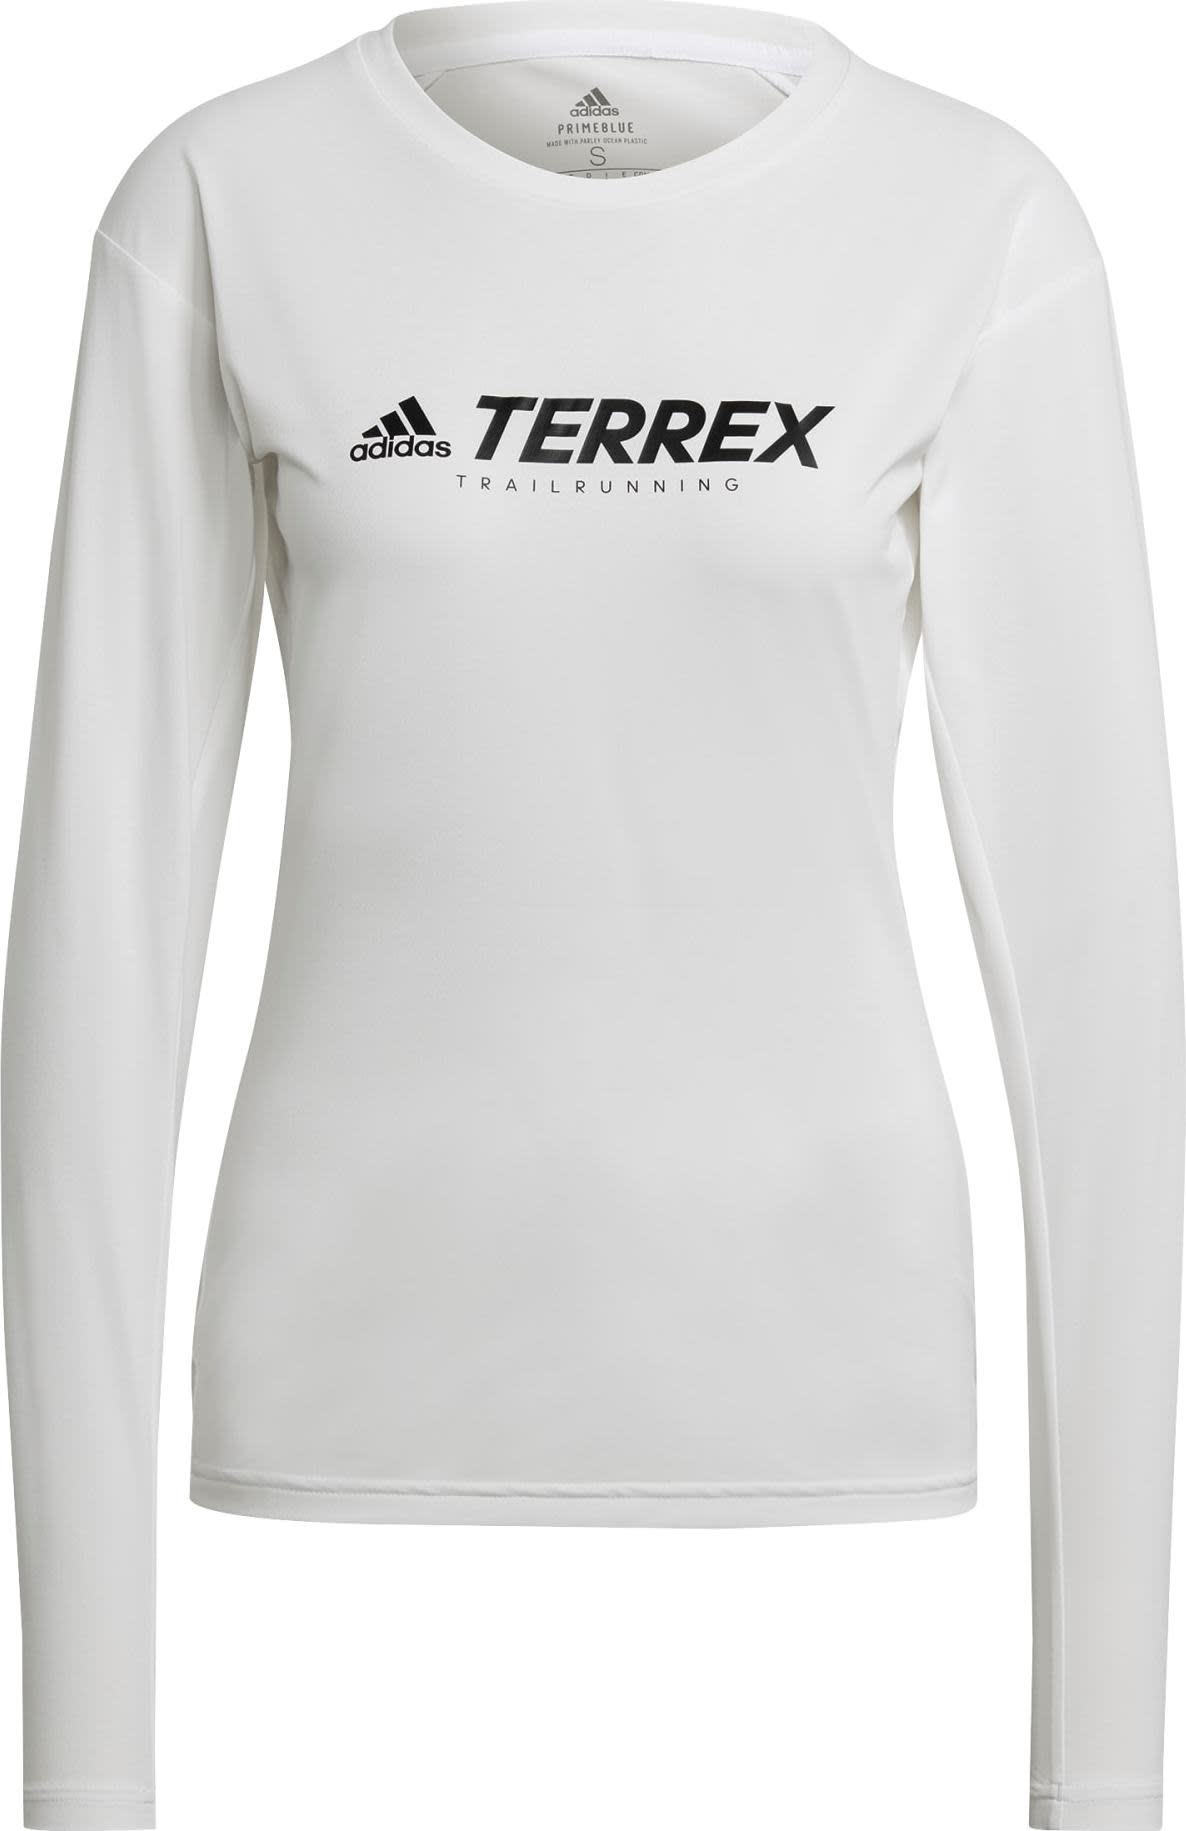 Adidas Adidas Women's Terrex Primeblue Trail LS Top WHITE L, WHITE